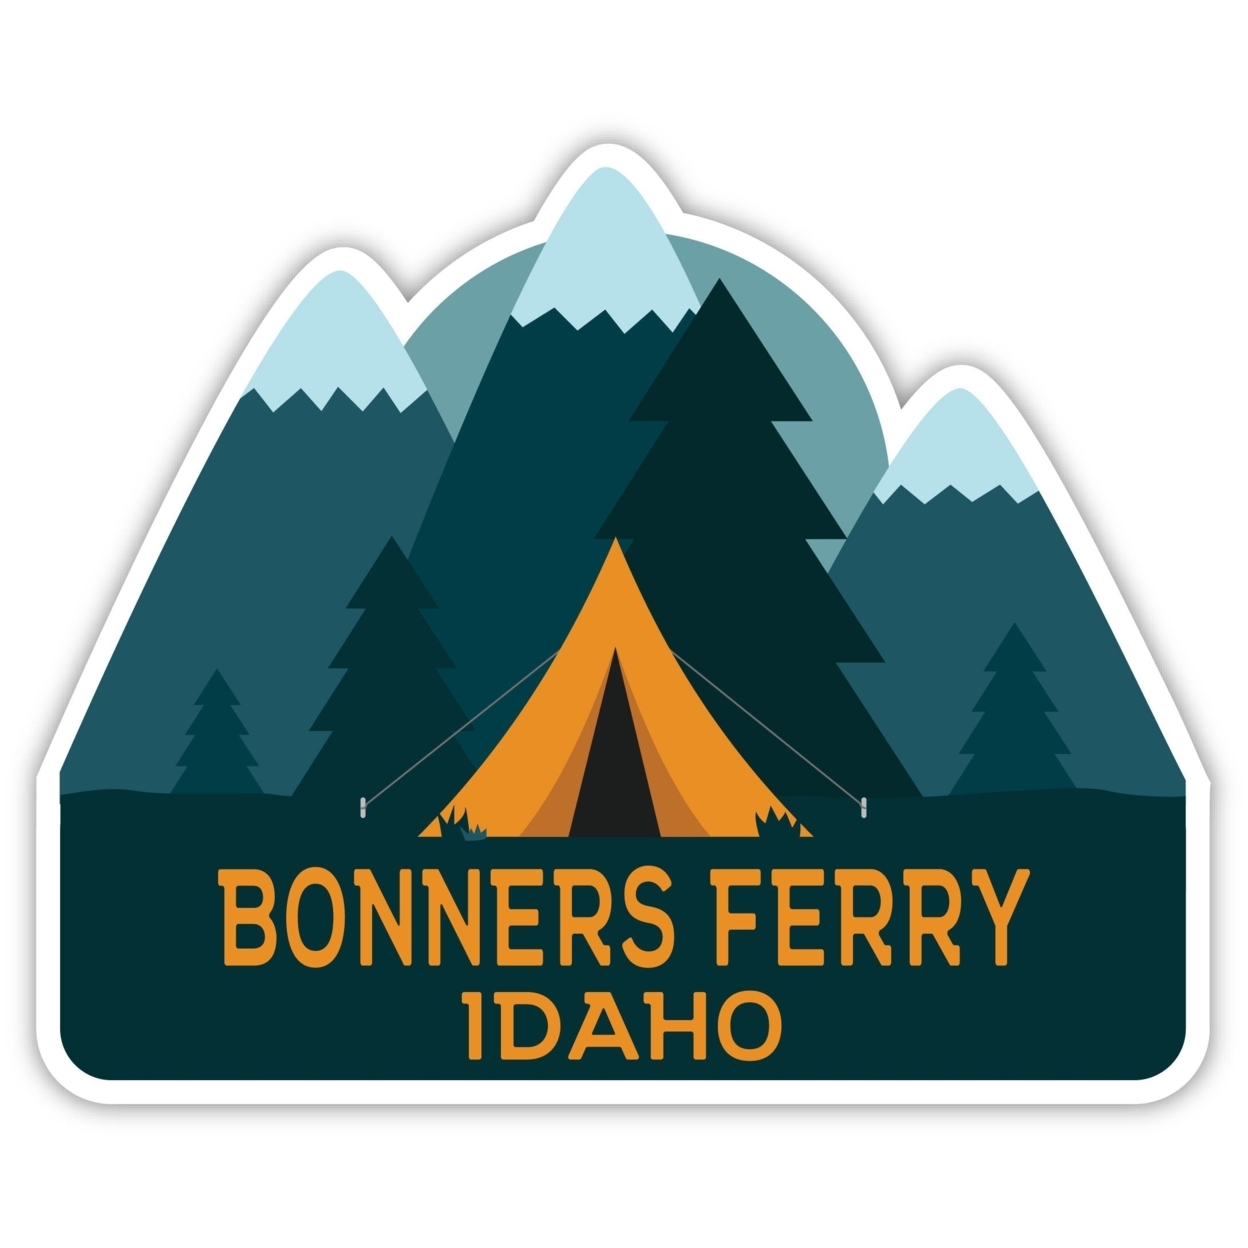 Bonners Ferry Idaho Souvenir Decorative Stickers (Choose Theme And Size) - Single Unit, 2-Inch, Adventures Awaits